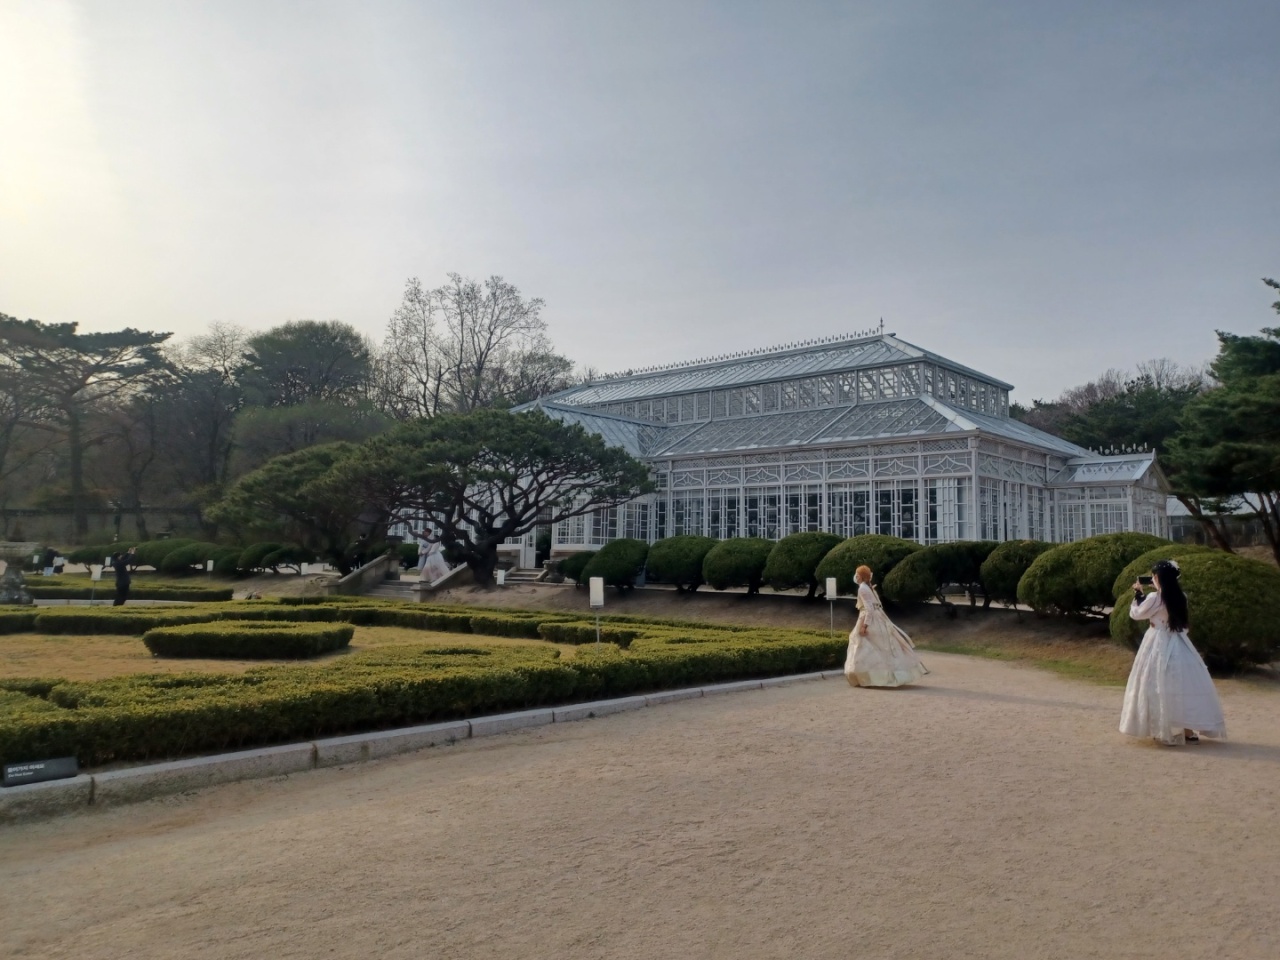 Visitors dressed in hanbok enjoy the Grand Greenhouse of Changgyeonggung on April 5. (Lee Si-jin/The Korea Herald)